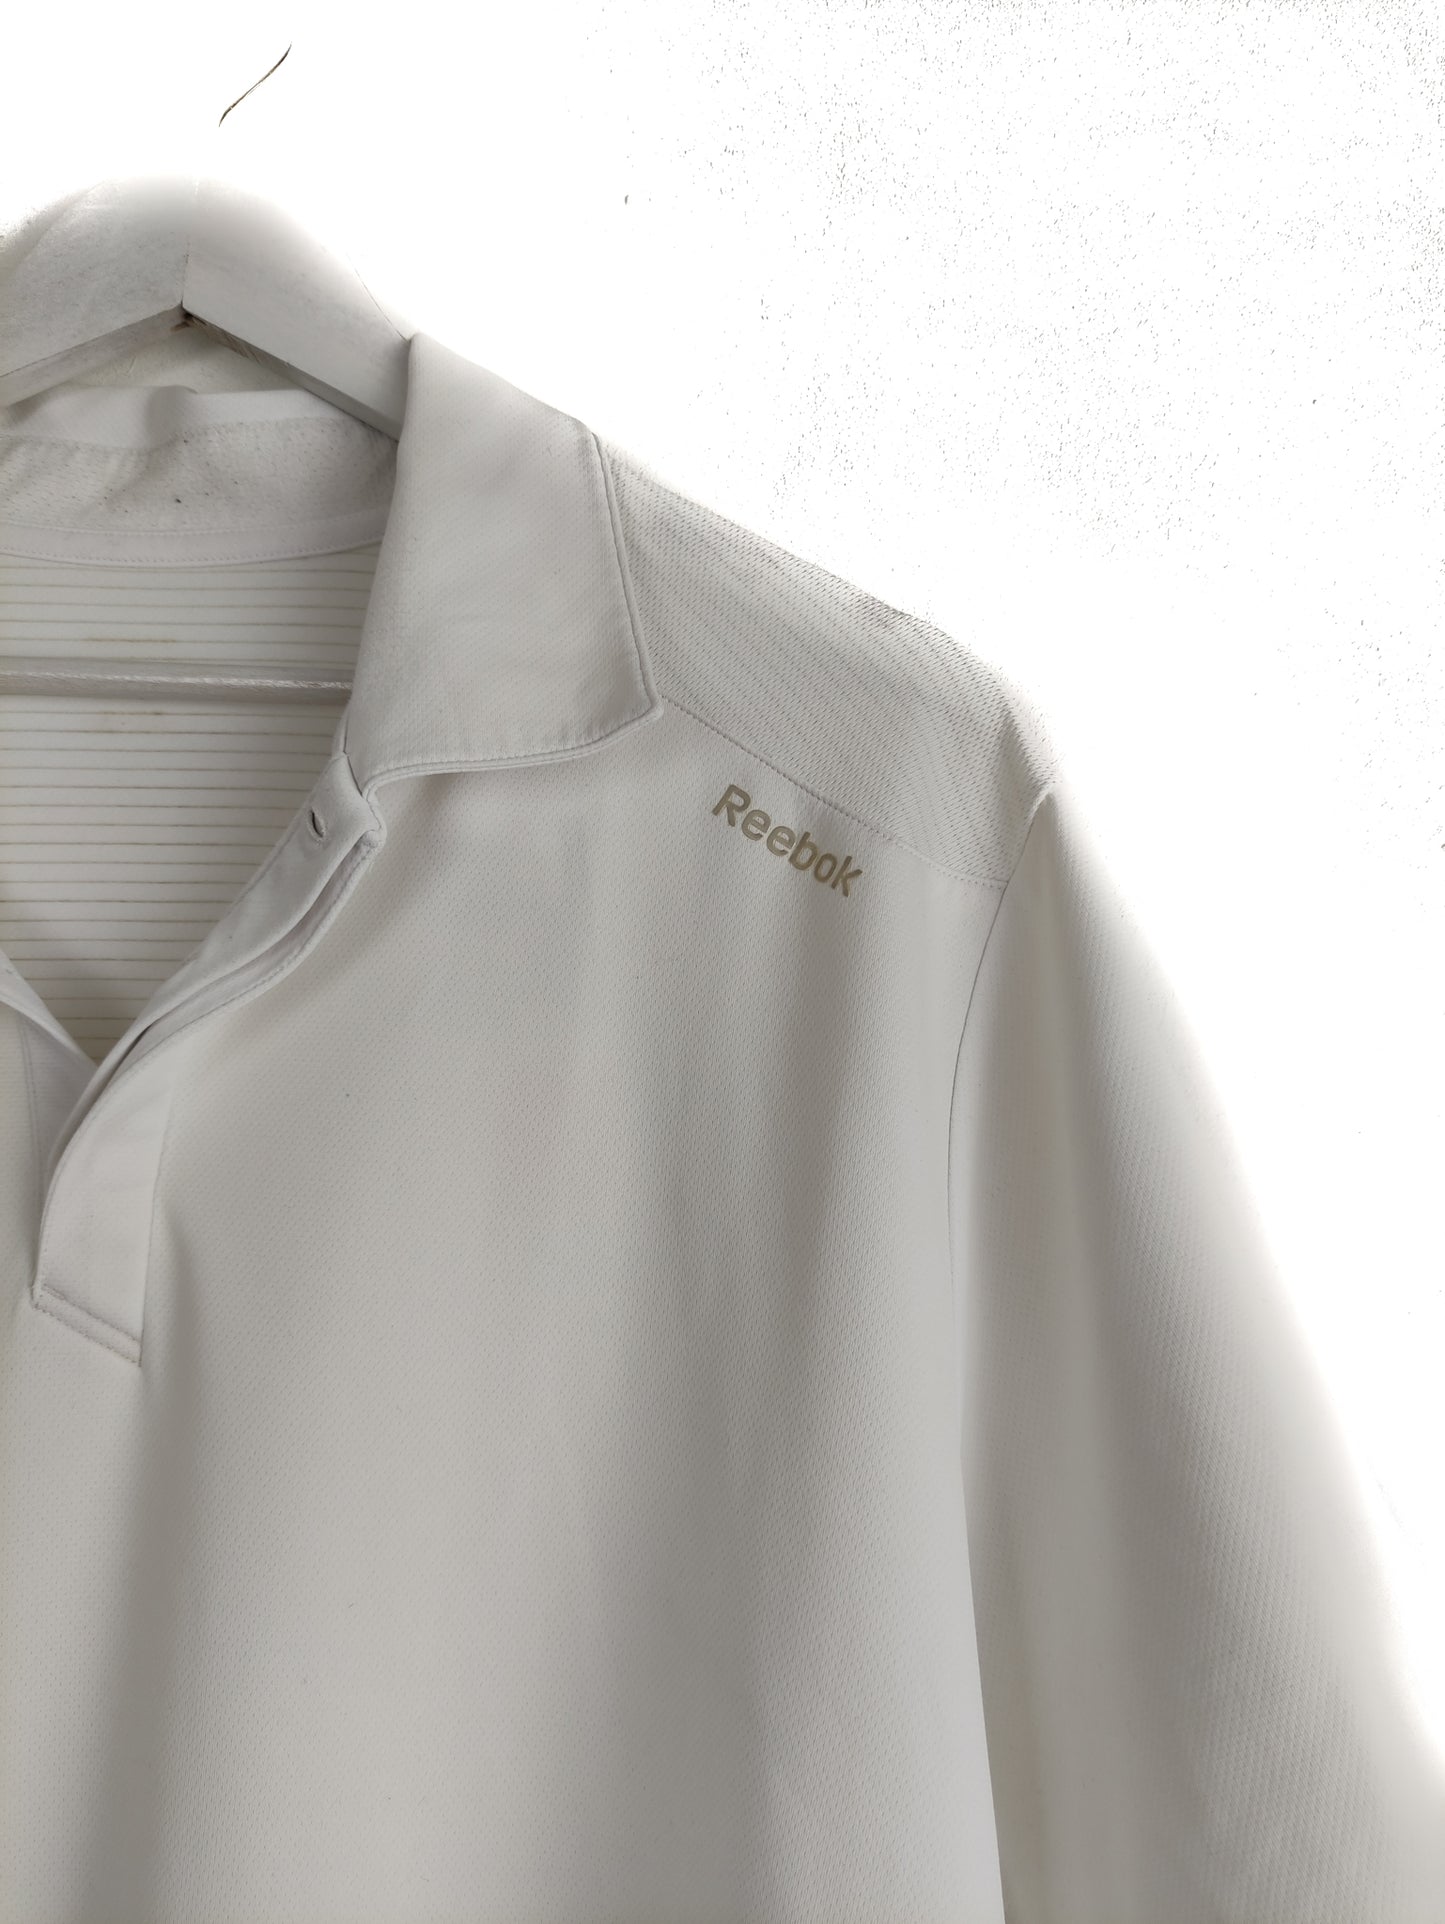 Aνδρική Αθλητική Mπλούζα - T-Shirt REEBOK σε Λευκό Χρώμα (XL)